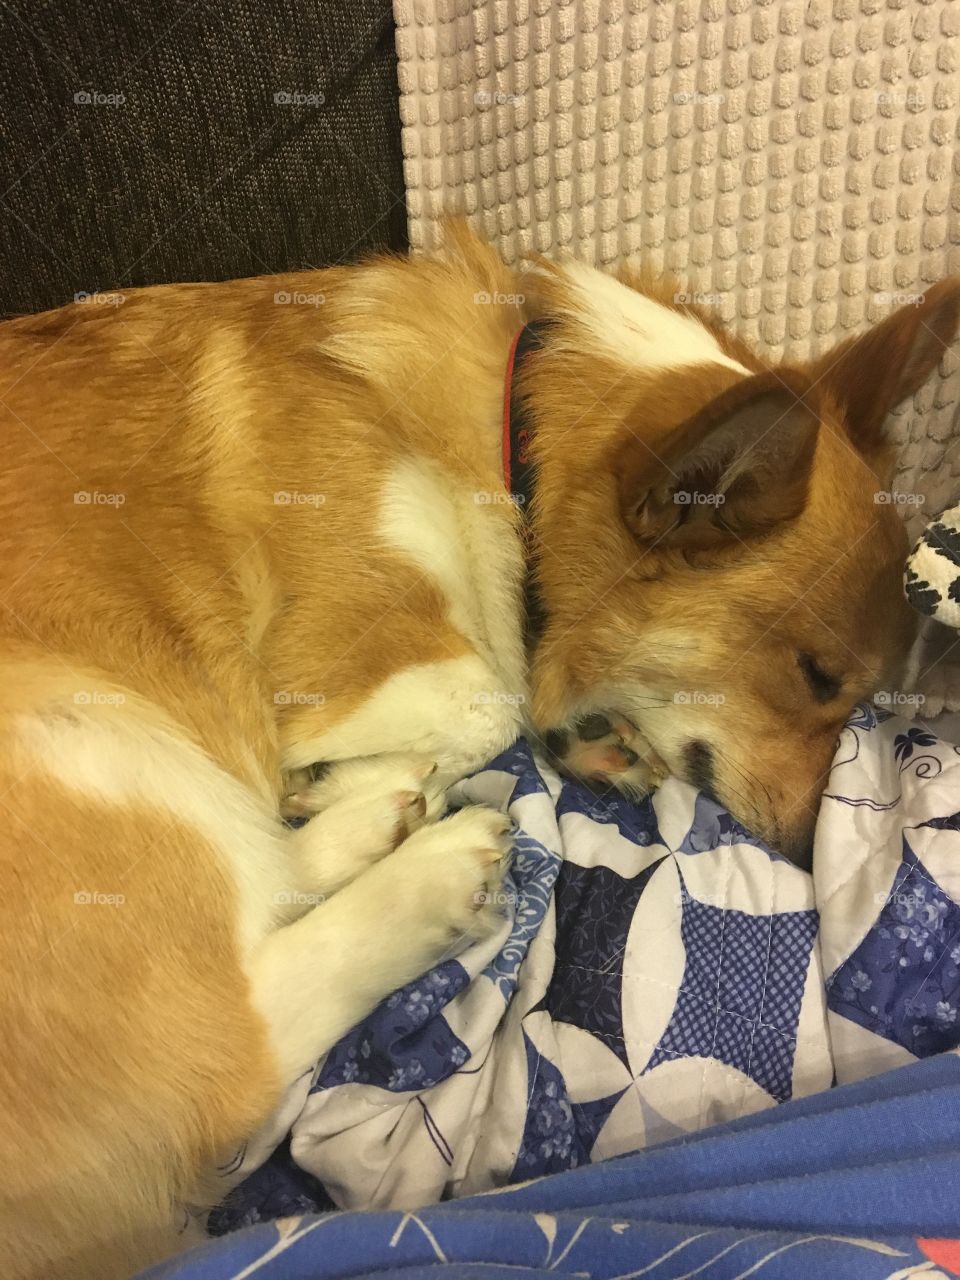 Sleepy corgi cute blanket dog puppy pillow